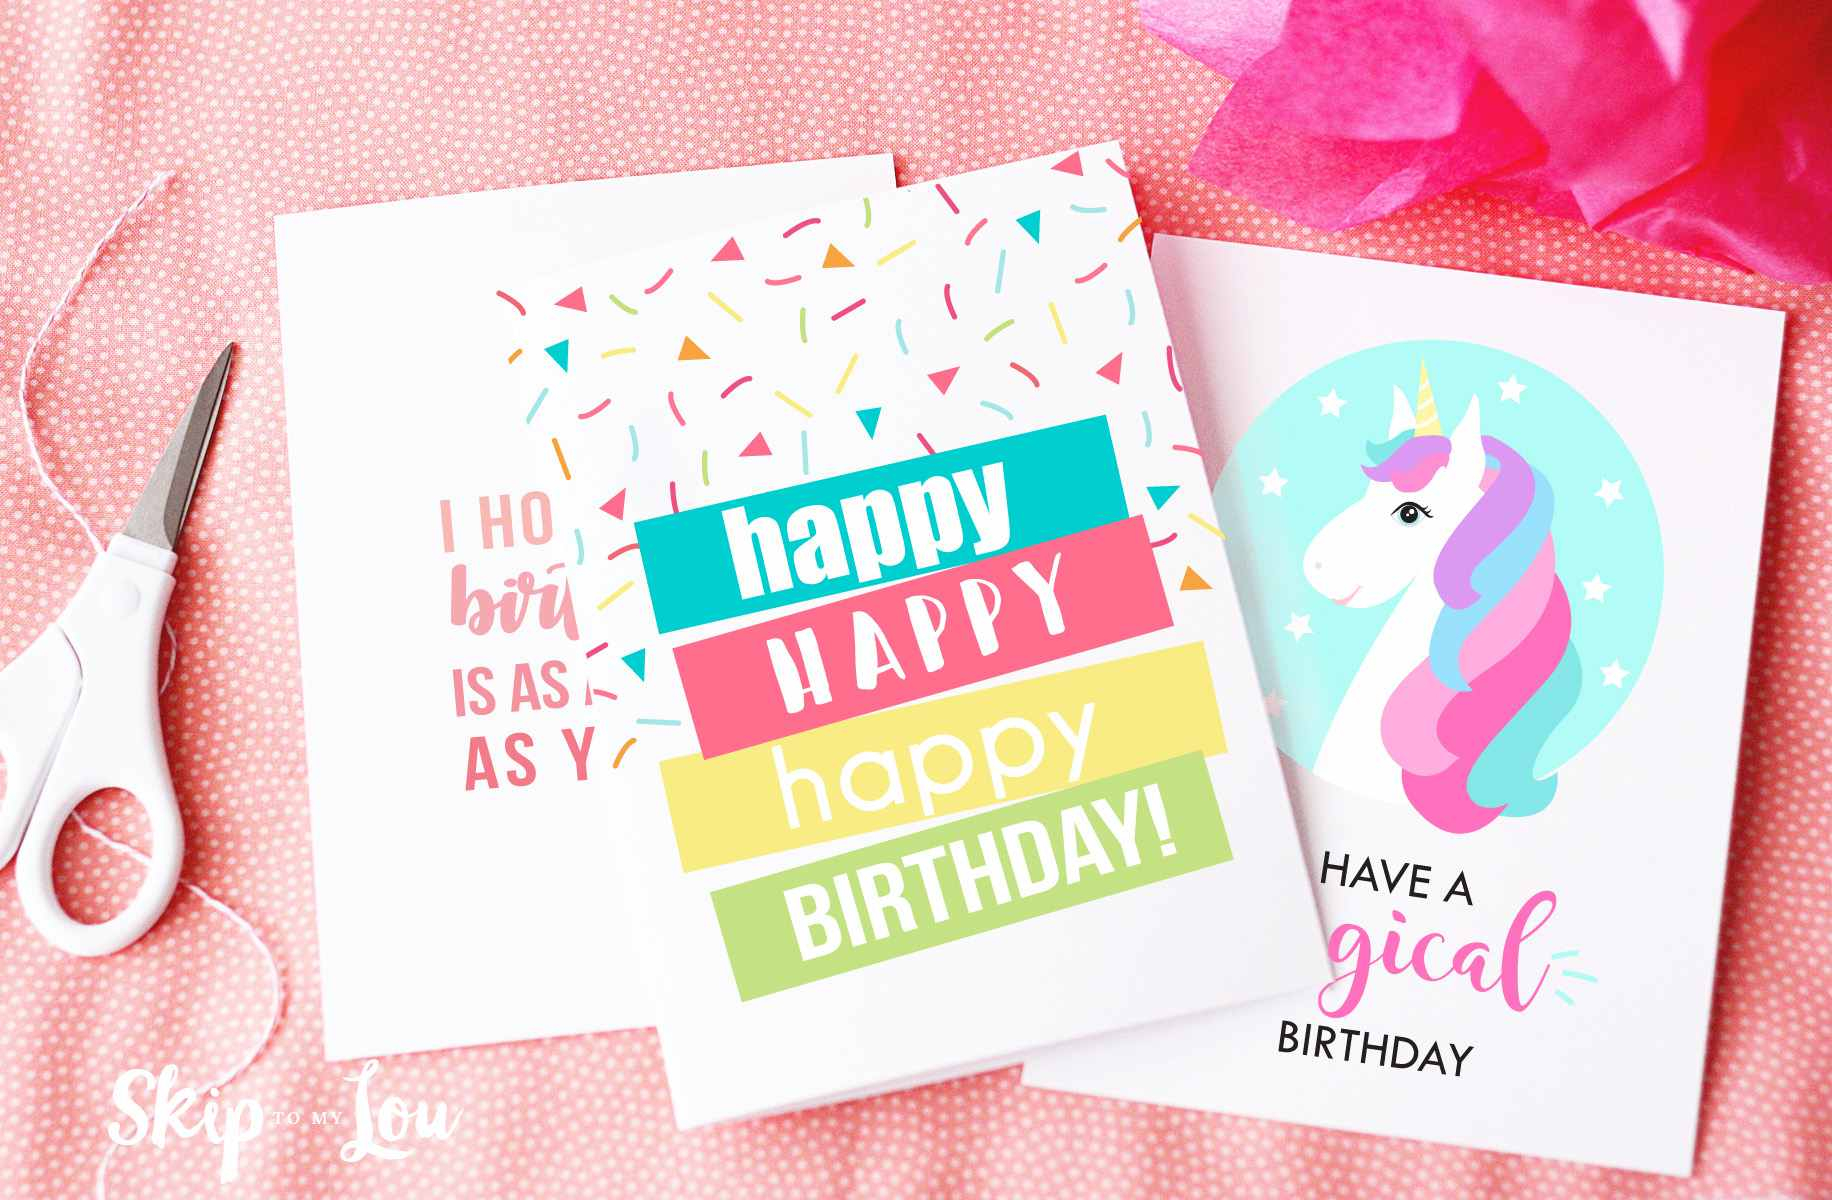 Giant Birthday Card Ideas 9 Free Printable Birthday Cards For Everyone